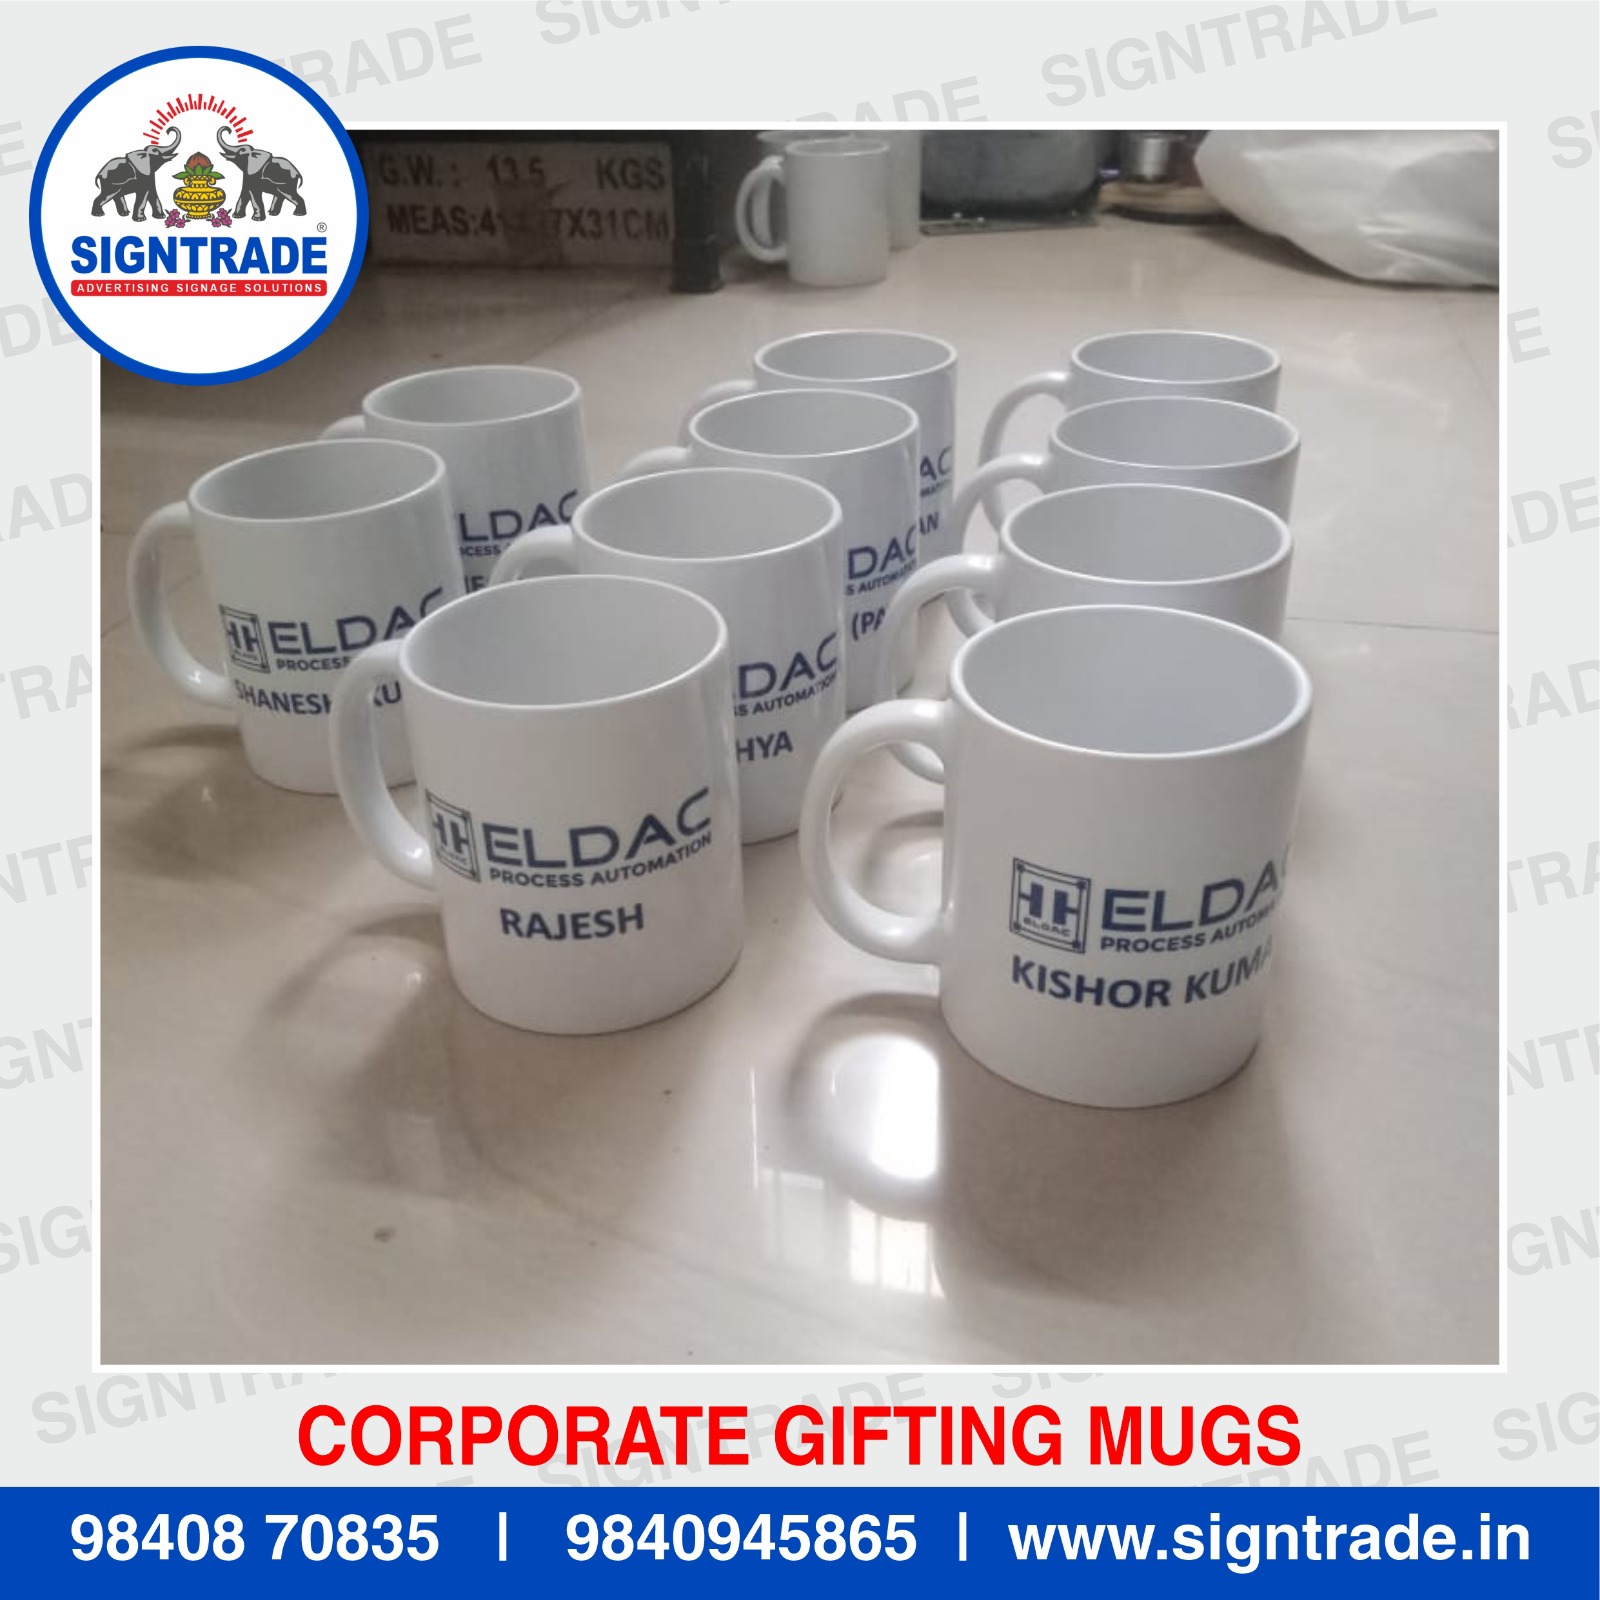 Corporate Mug Printing Services in Chennai